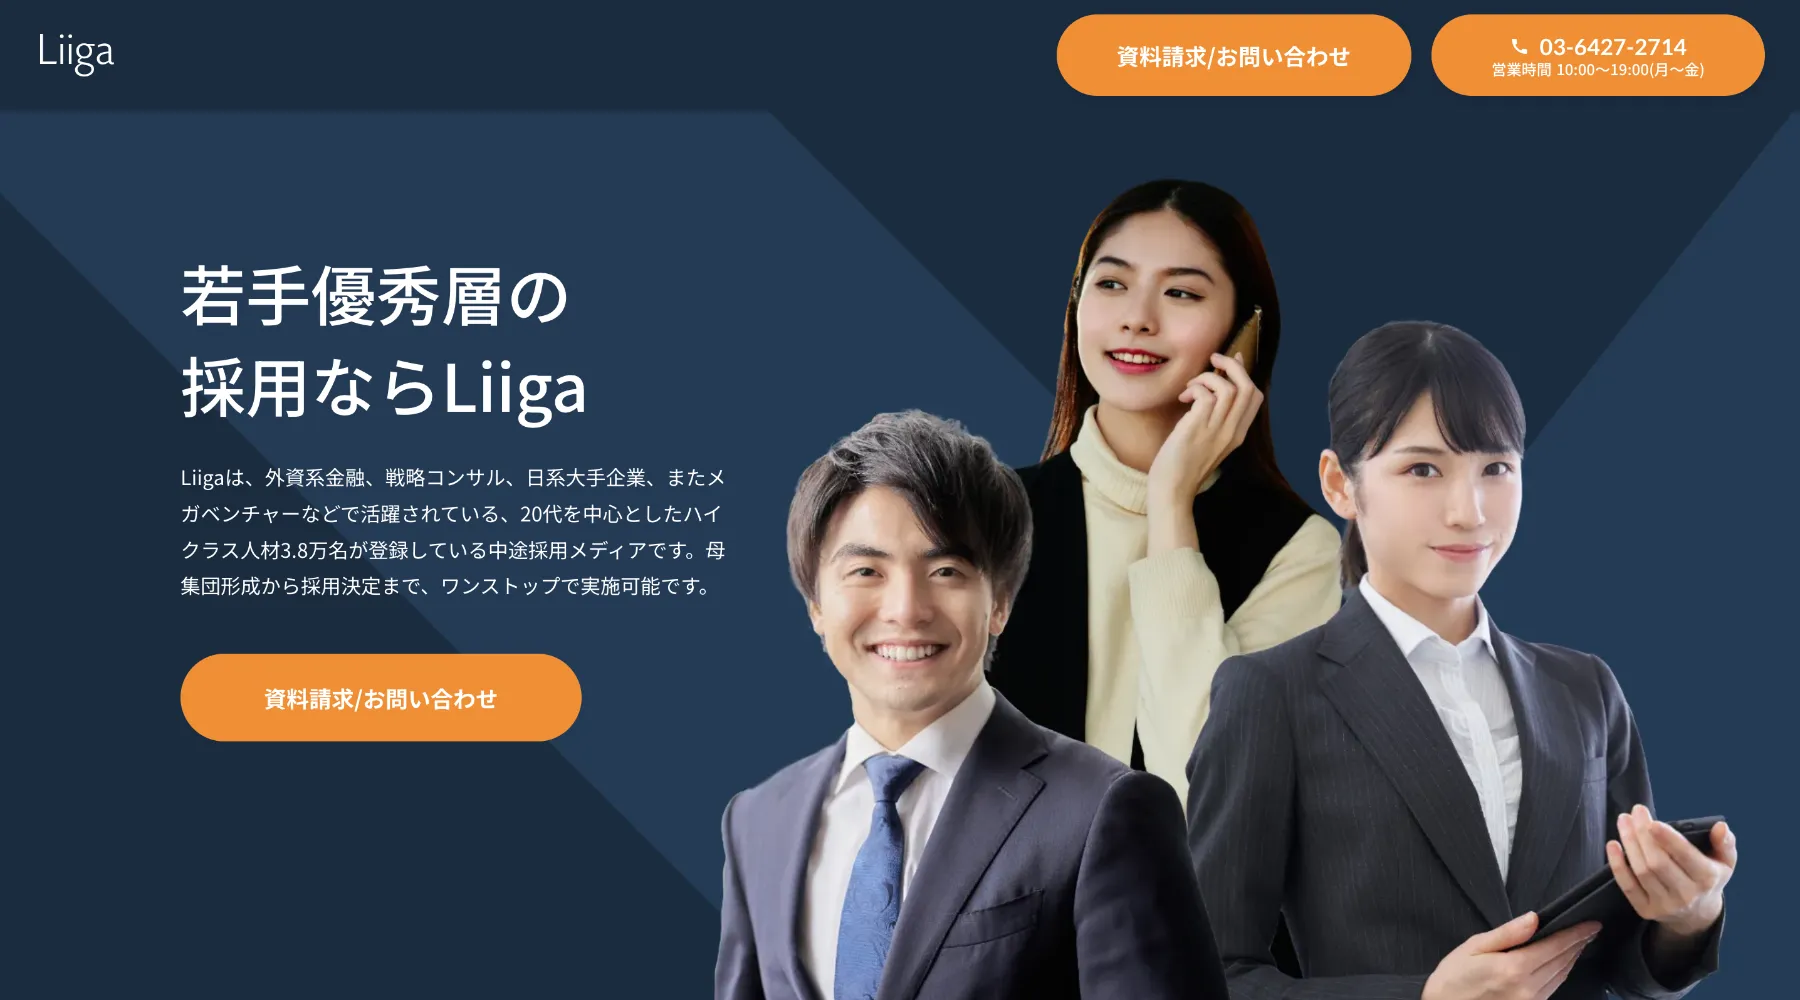 Liiga公式サイト